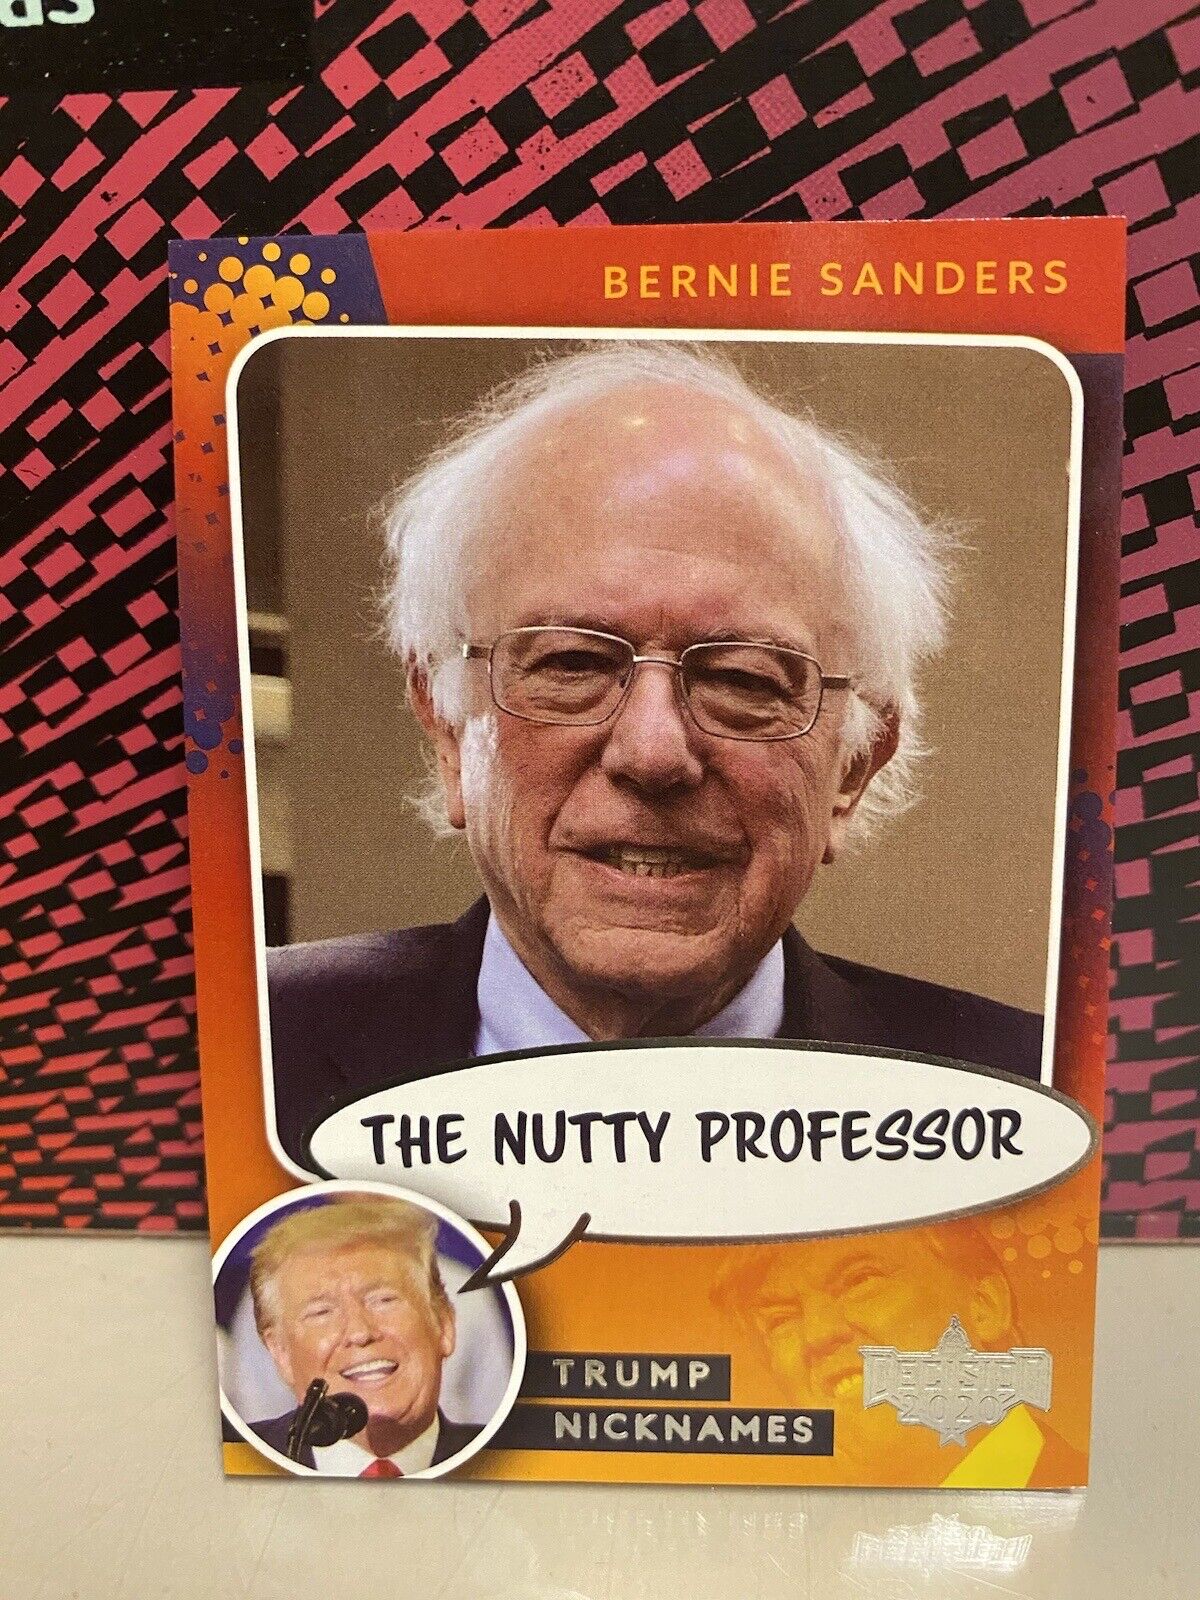 Bernie Sanders NN15 2020 Decision 2020 Trump Nicknames - The Nutty Professor